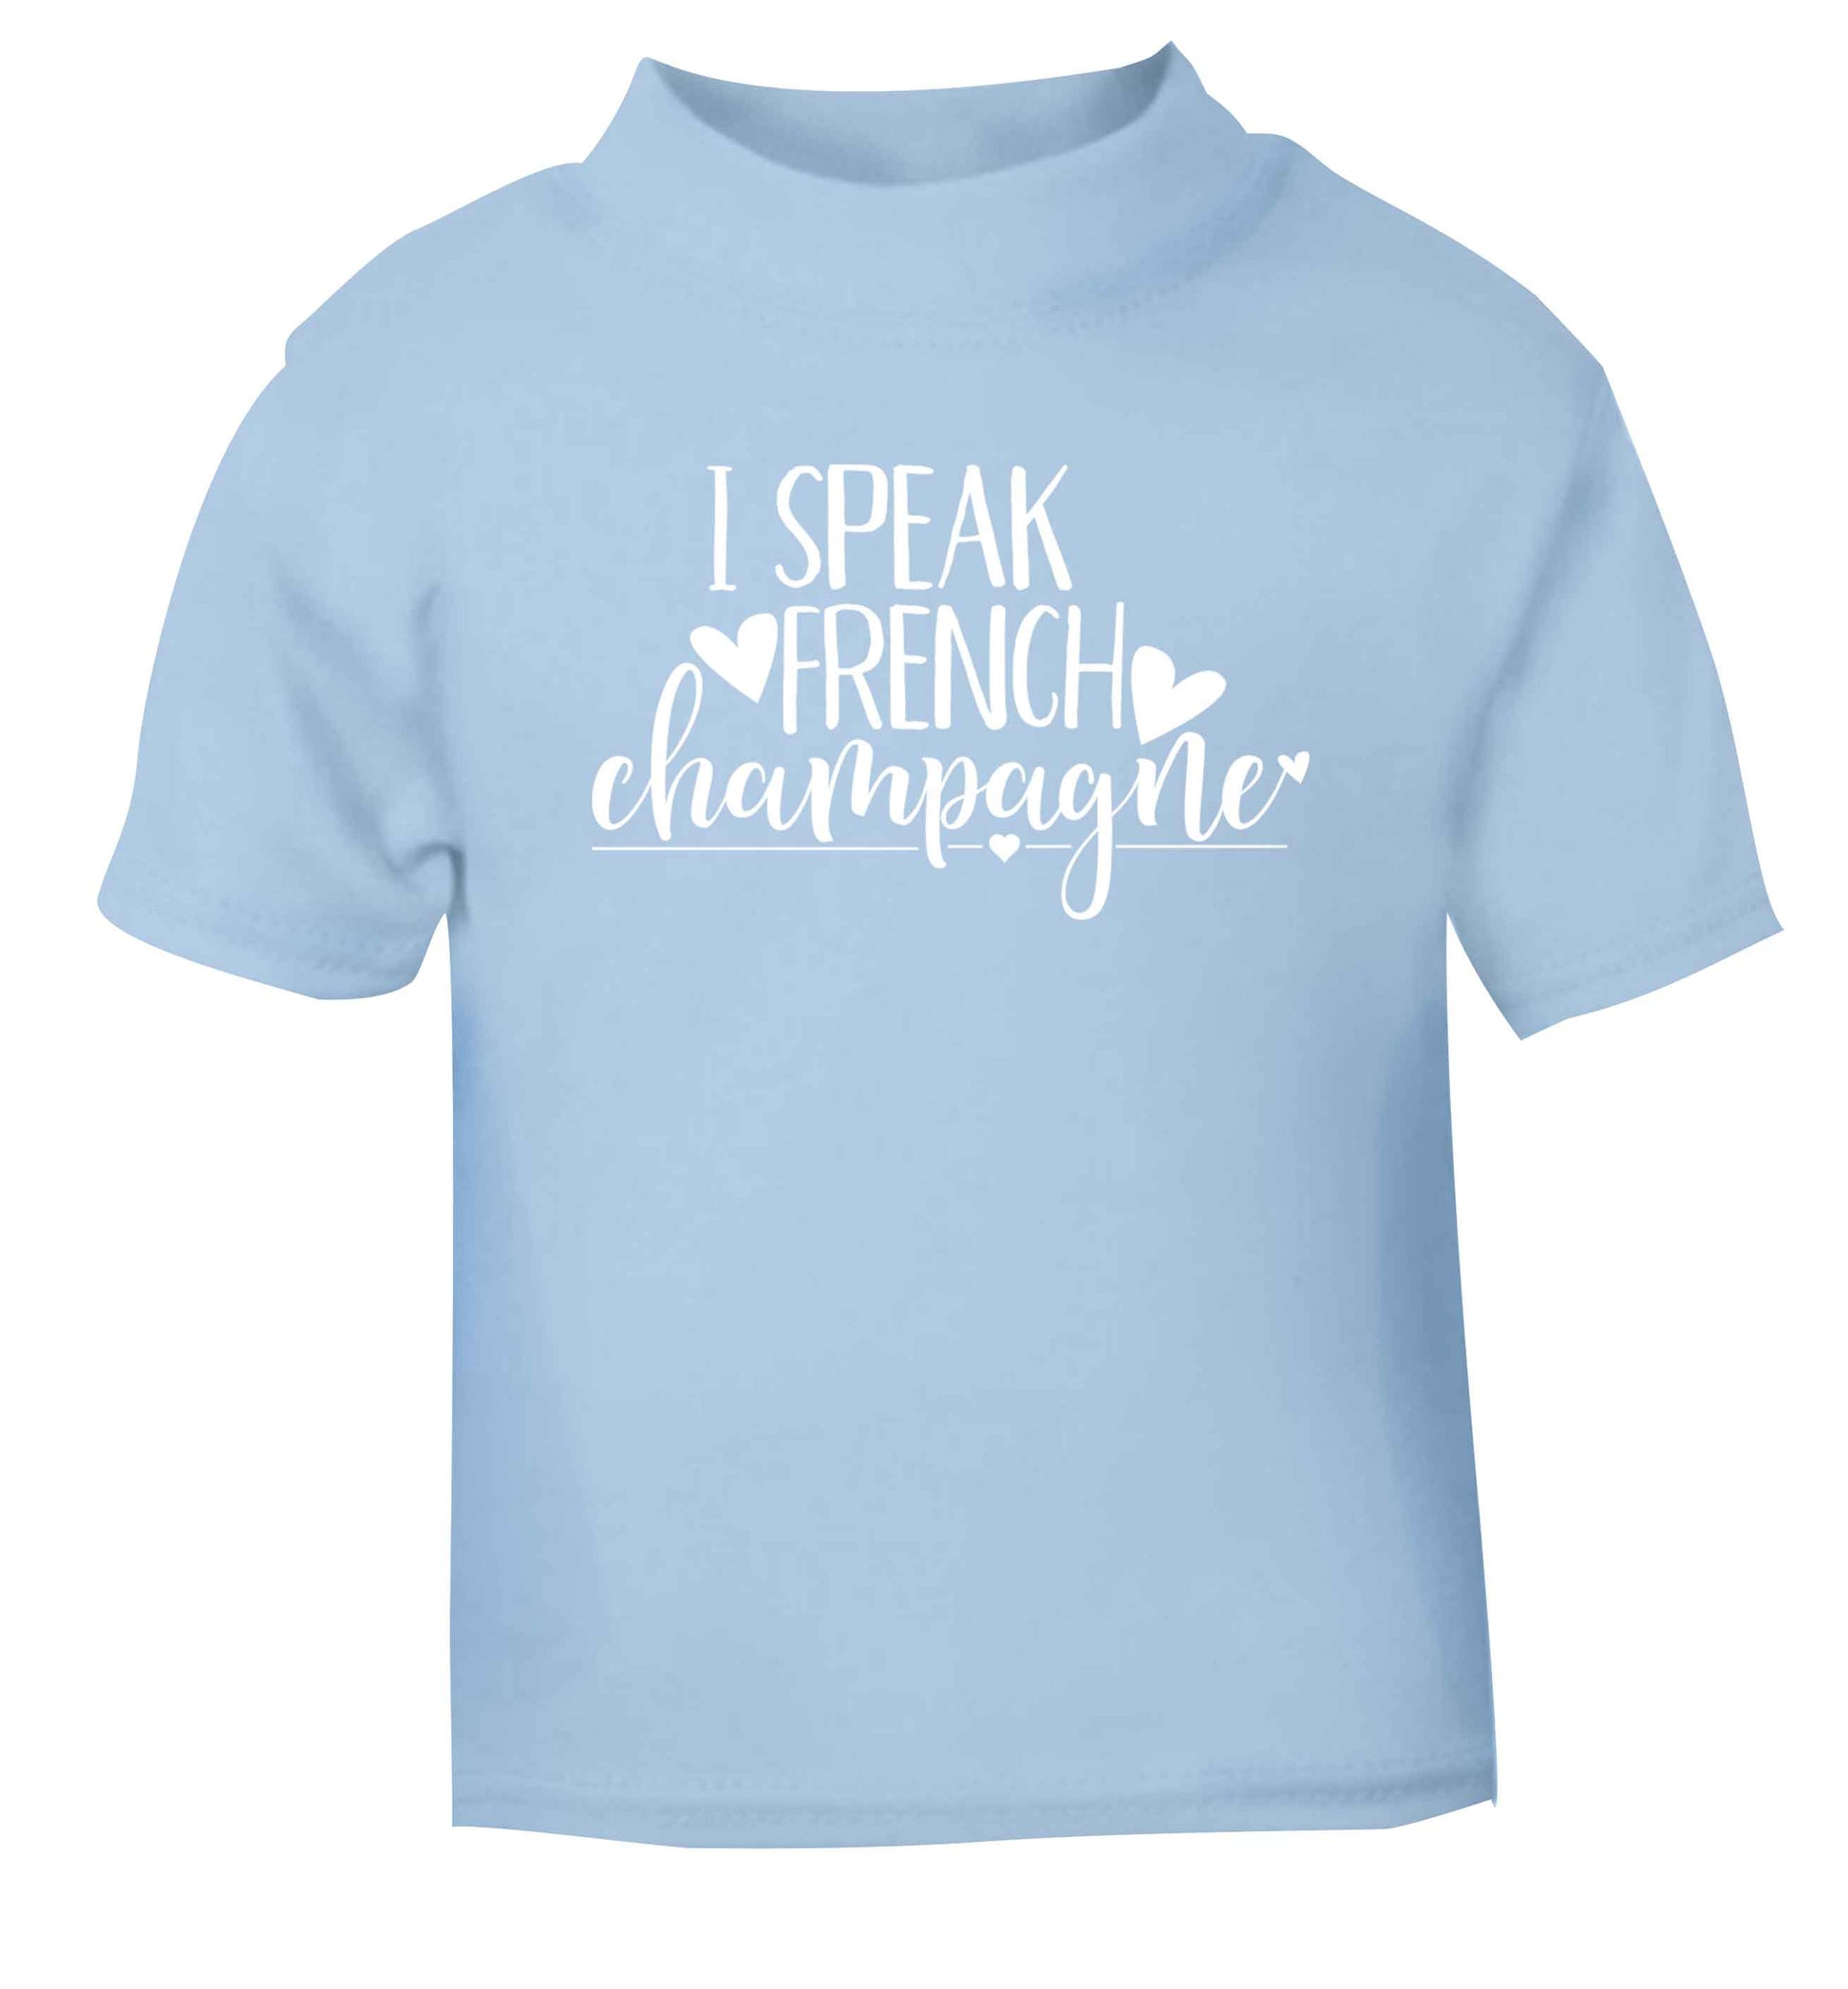 I speak french champagne light blue Baby Toddler Tshirt 2 Years